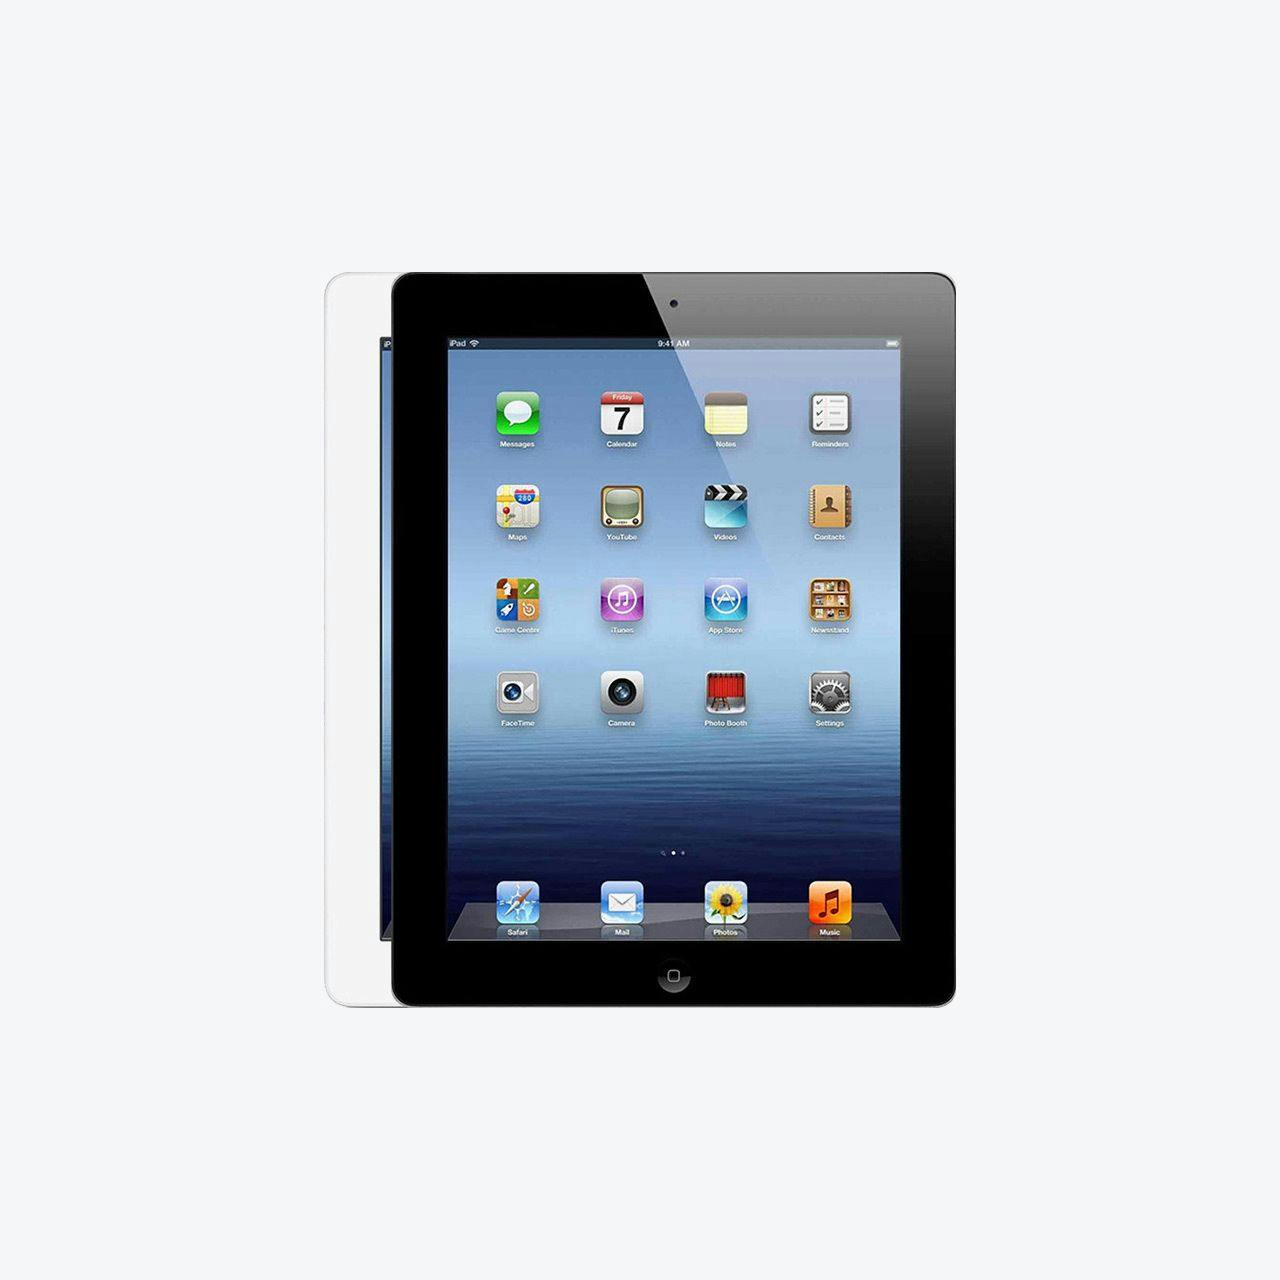 Image of iPad 3rd Generation.